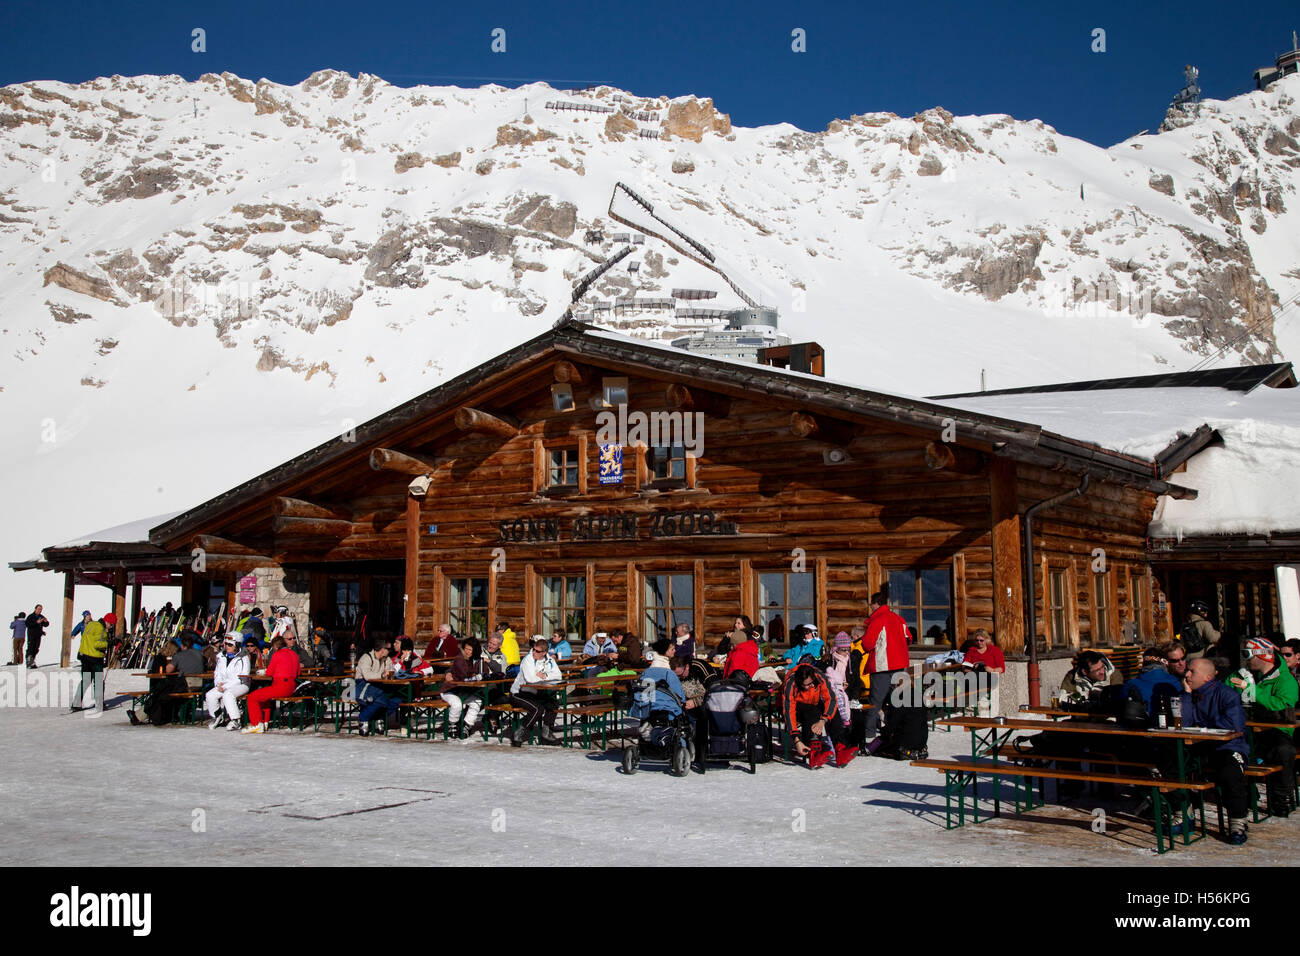 Sonn Alpin, 2600m, restaurant, winter, Zugspitzplatt plateau, Mt Zugspitze, Bavaria Stock Photo